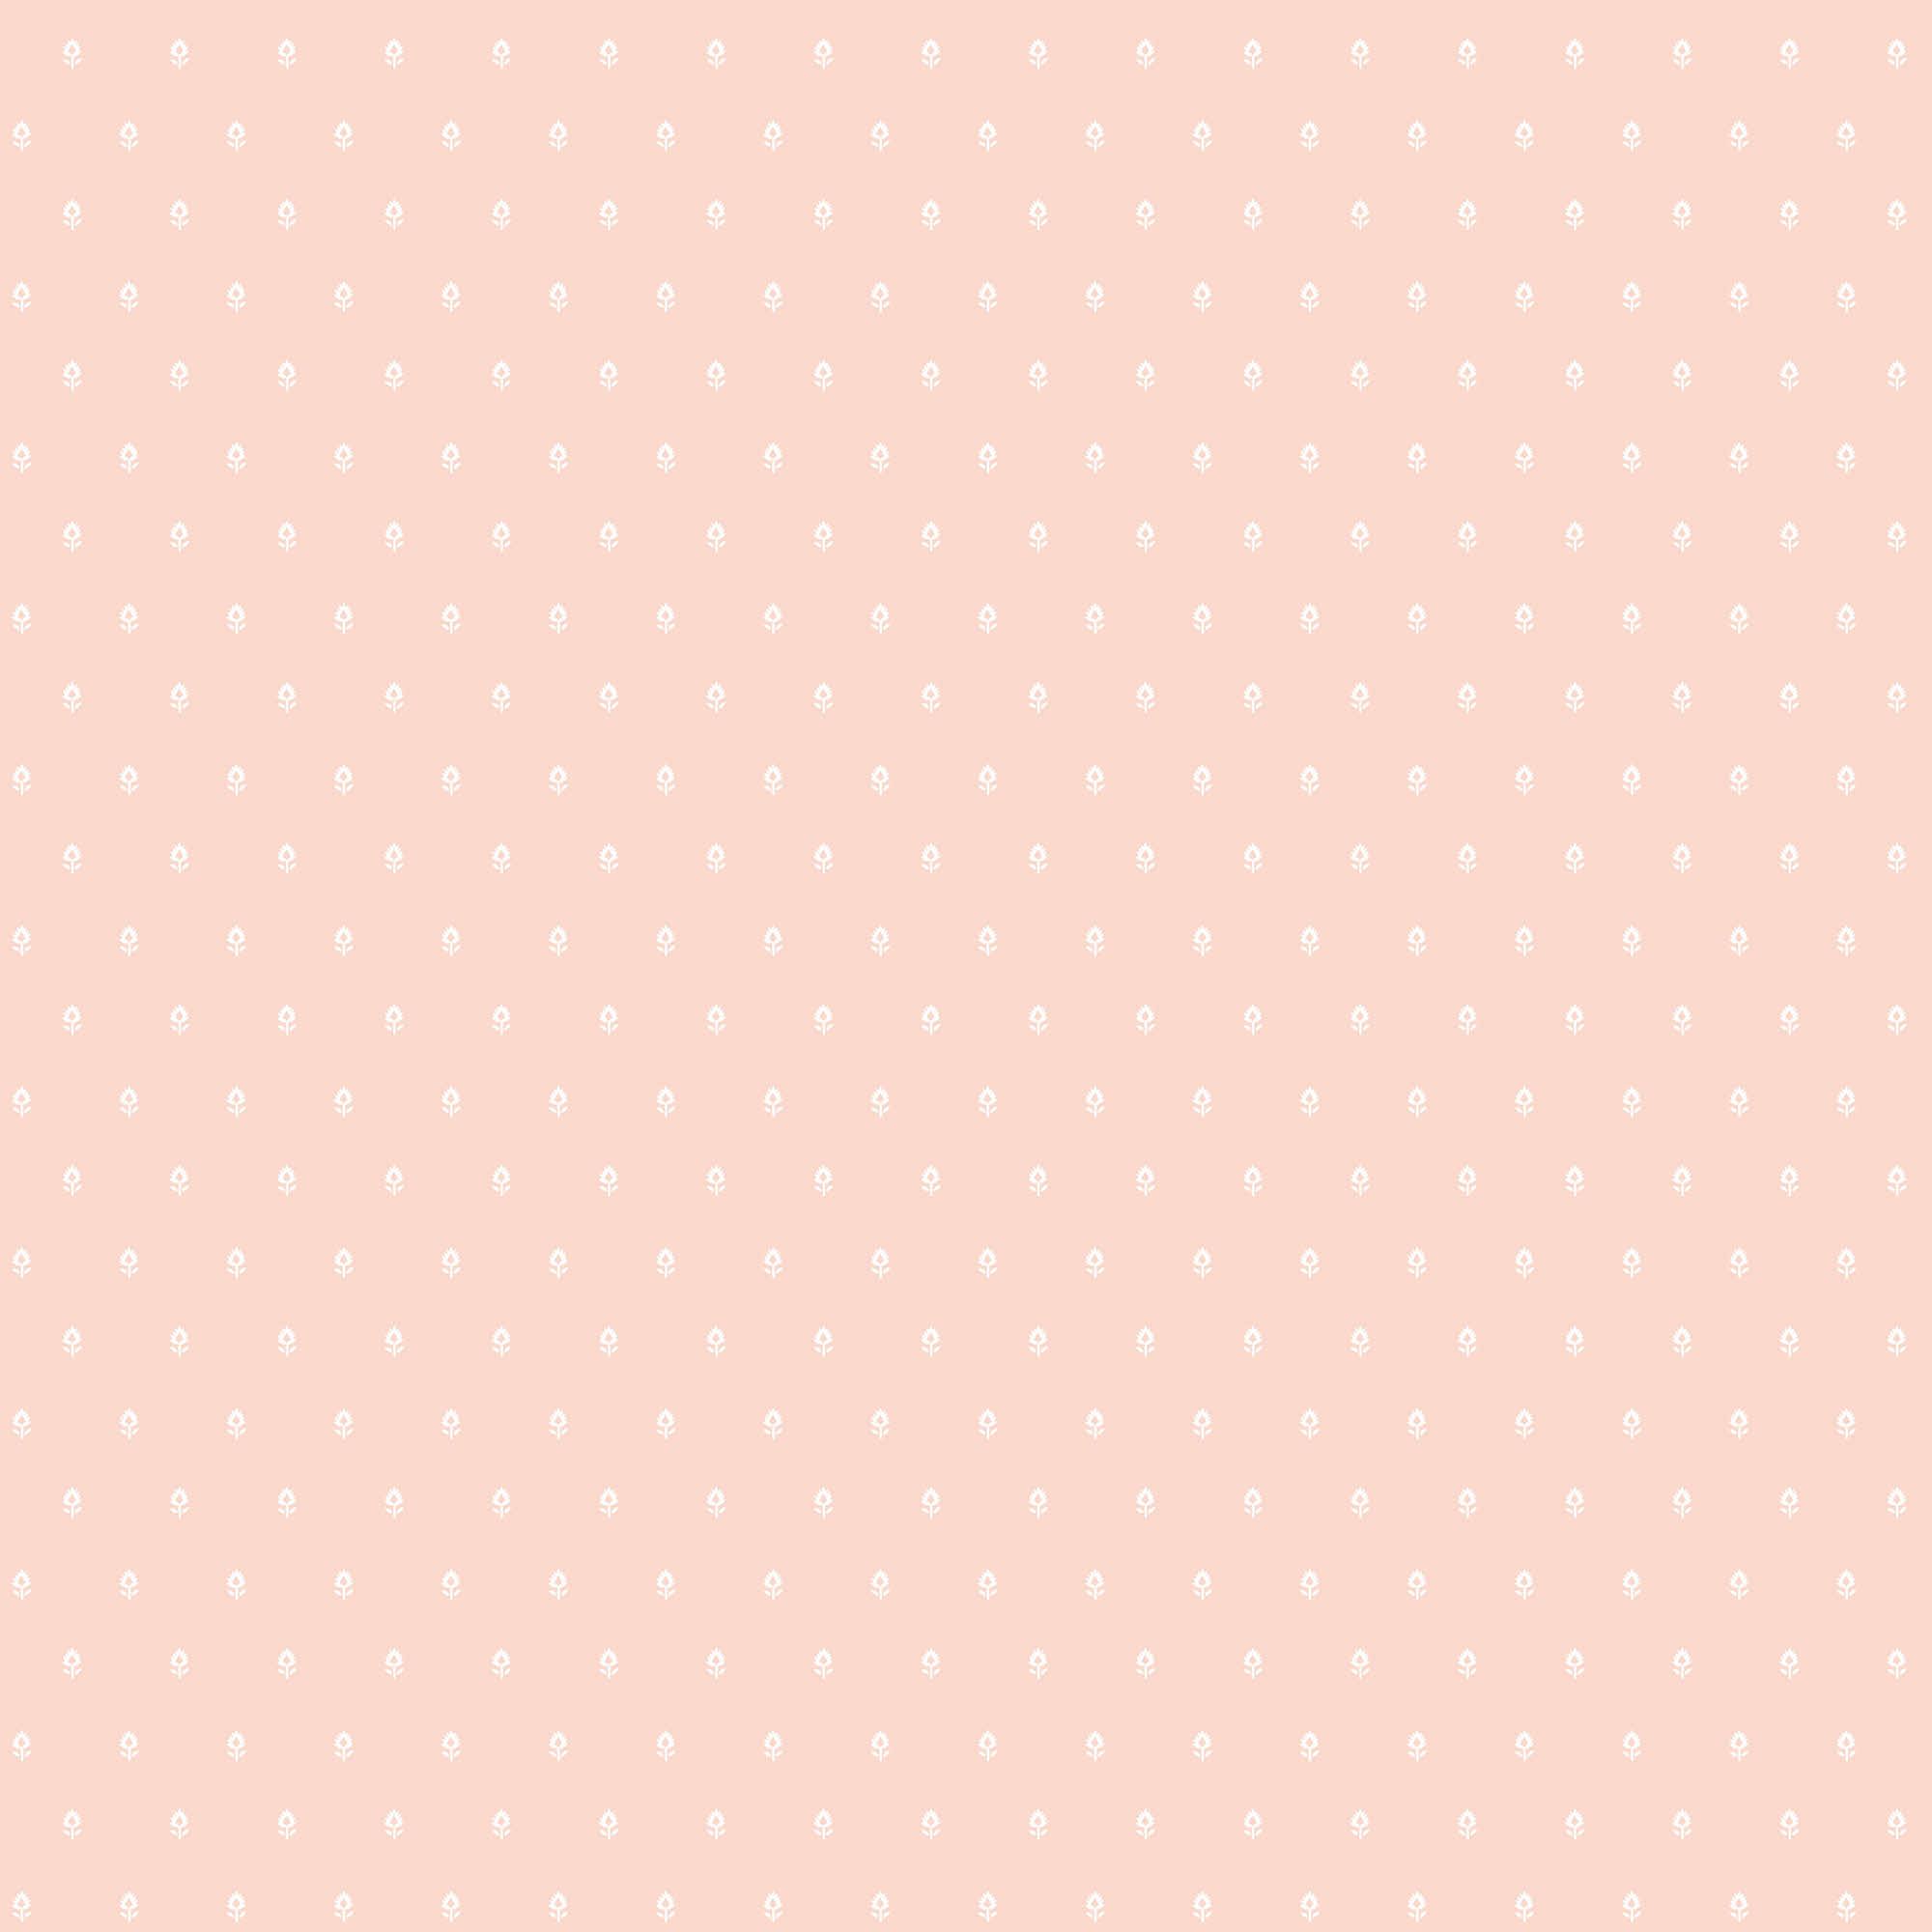 Tiny Block Print Wallpaper - Traditional / Sample / Pink